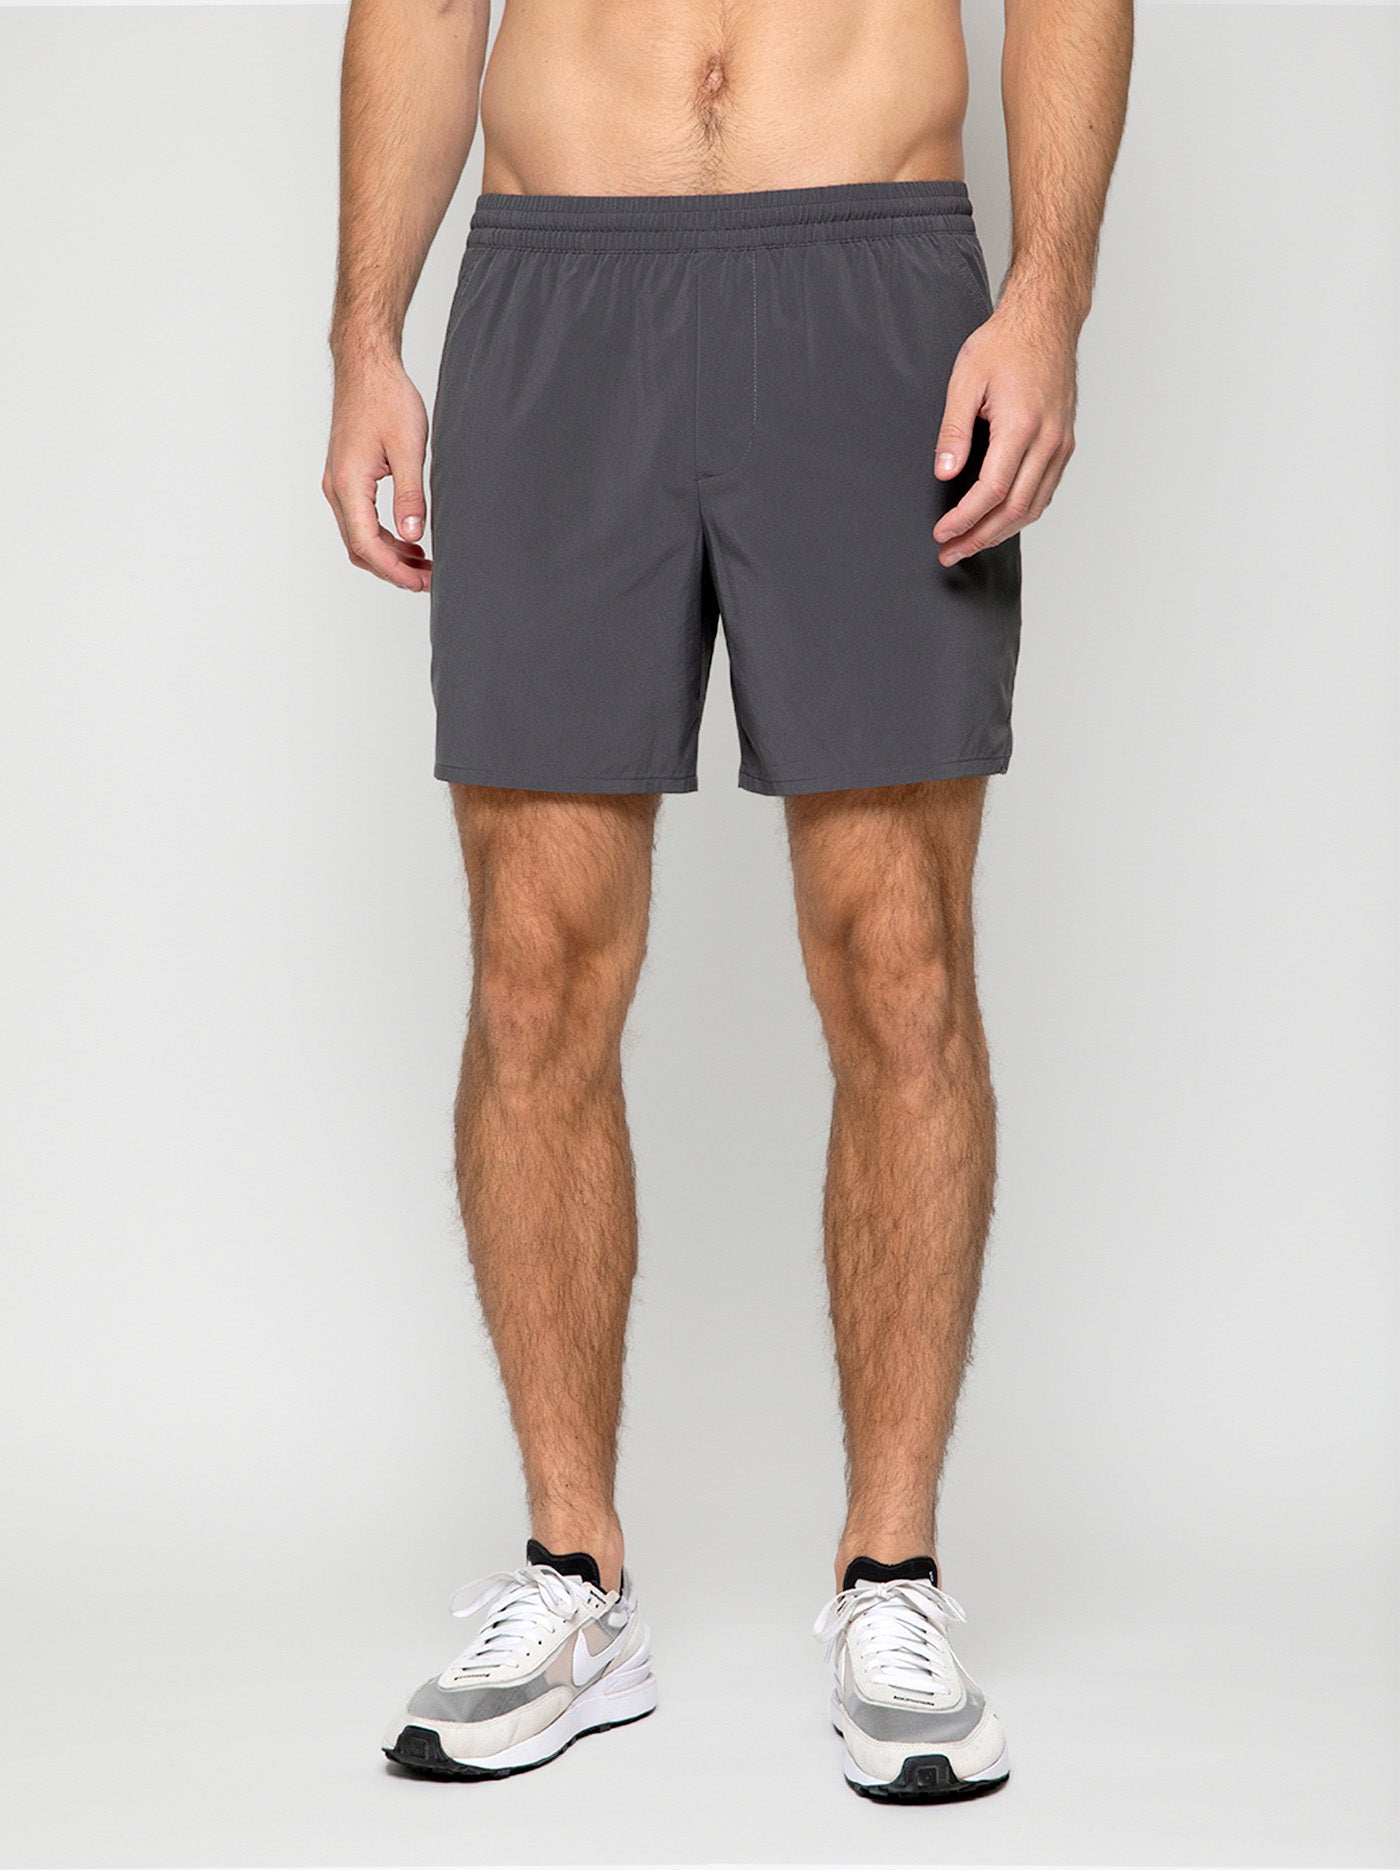 Slim Ultimate Shorts for Men - 6-inch inseam